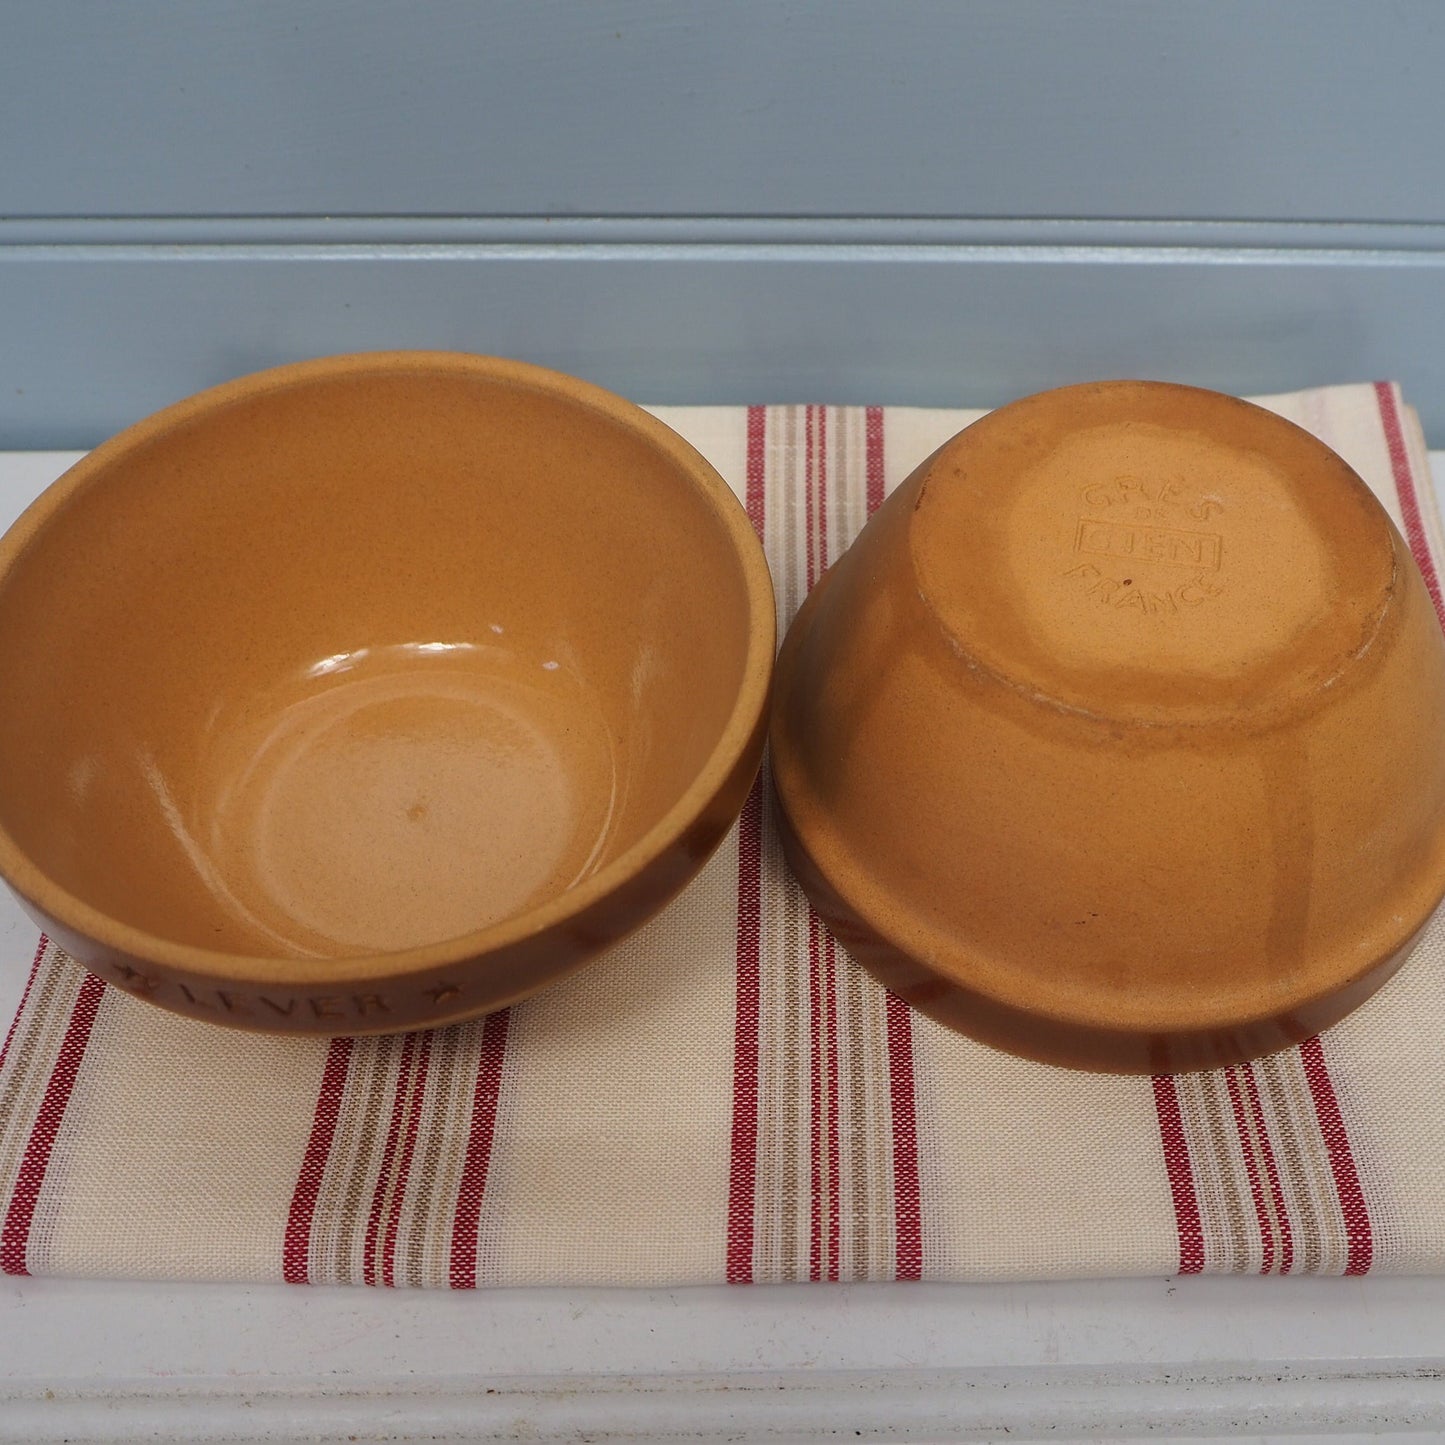 Pair vintage French Gien mini terracotta bowls Brown glazed rims Beige glaze inner Rustic Farmhouse kitchen Ideal for dips crisps nuts jam